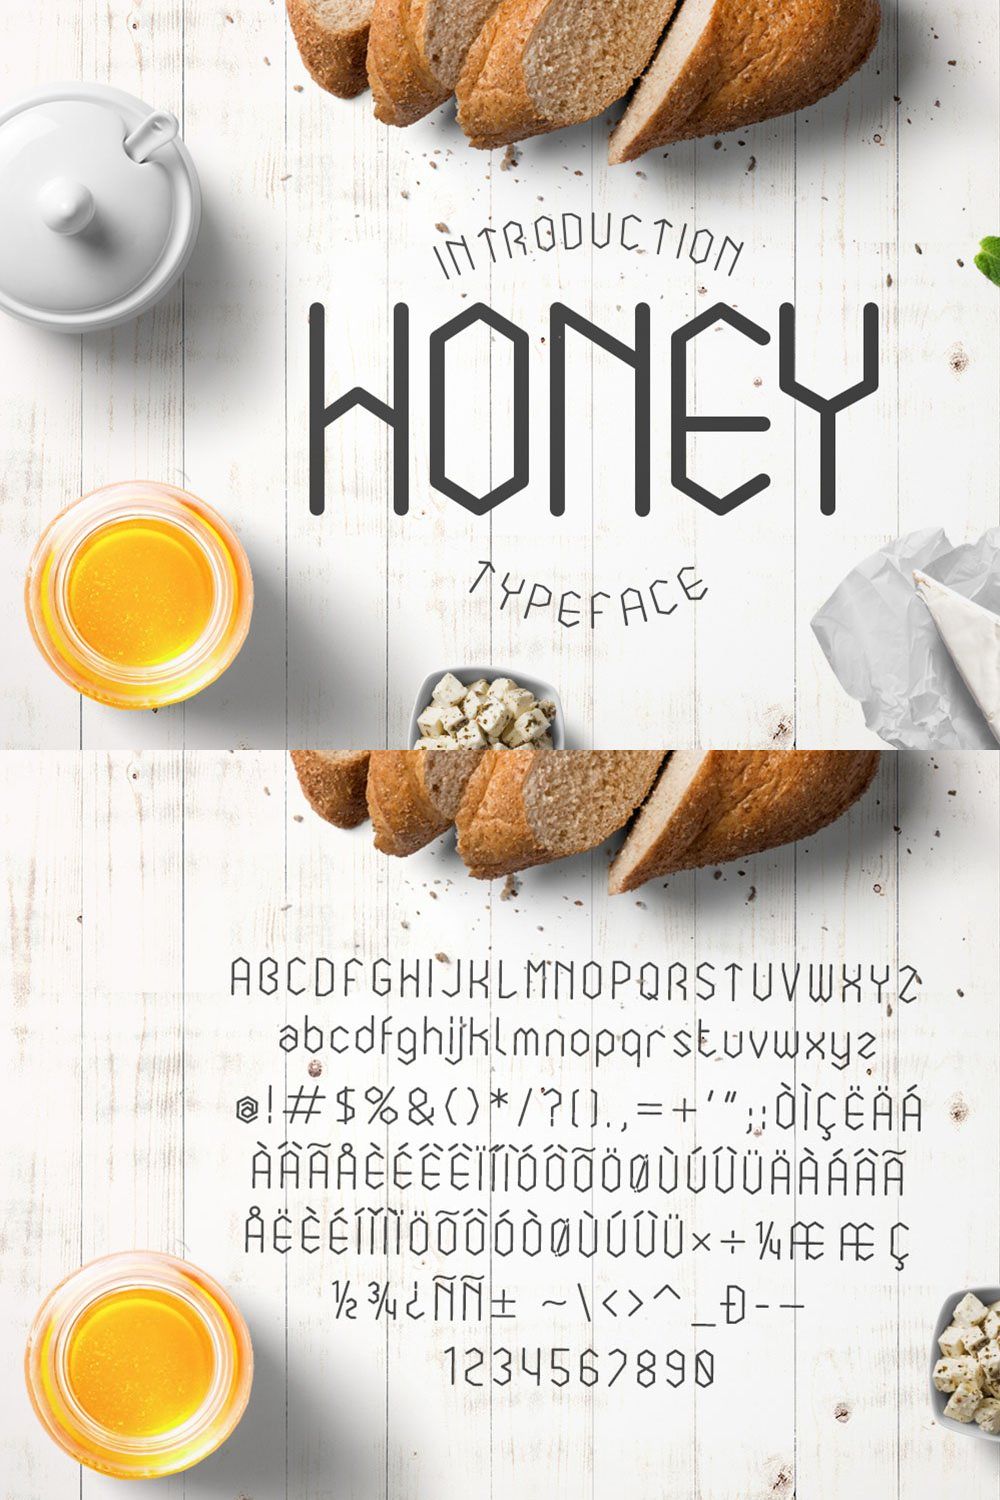 Honey pinterest preview image.